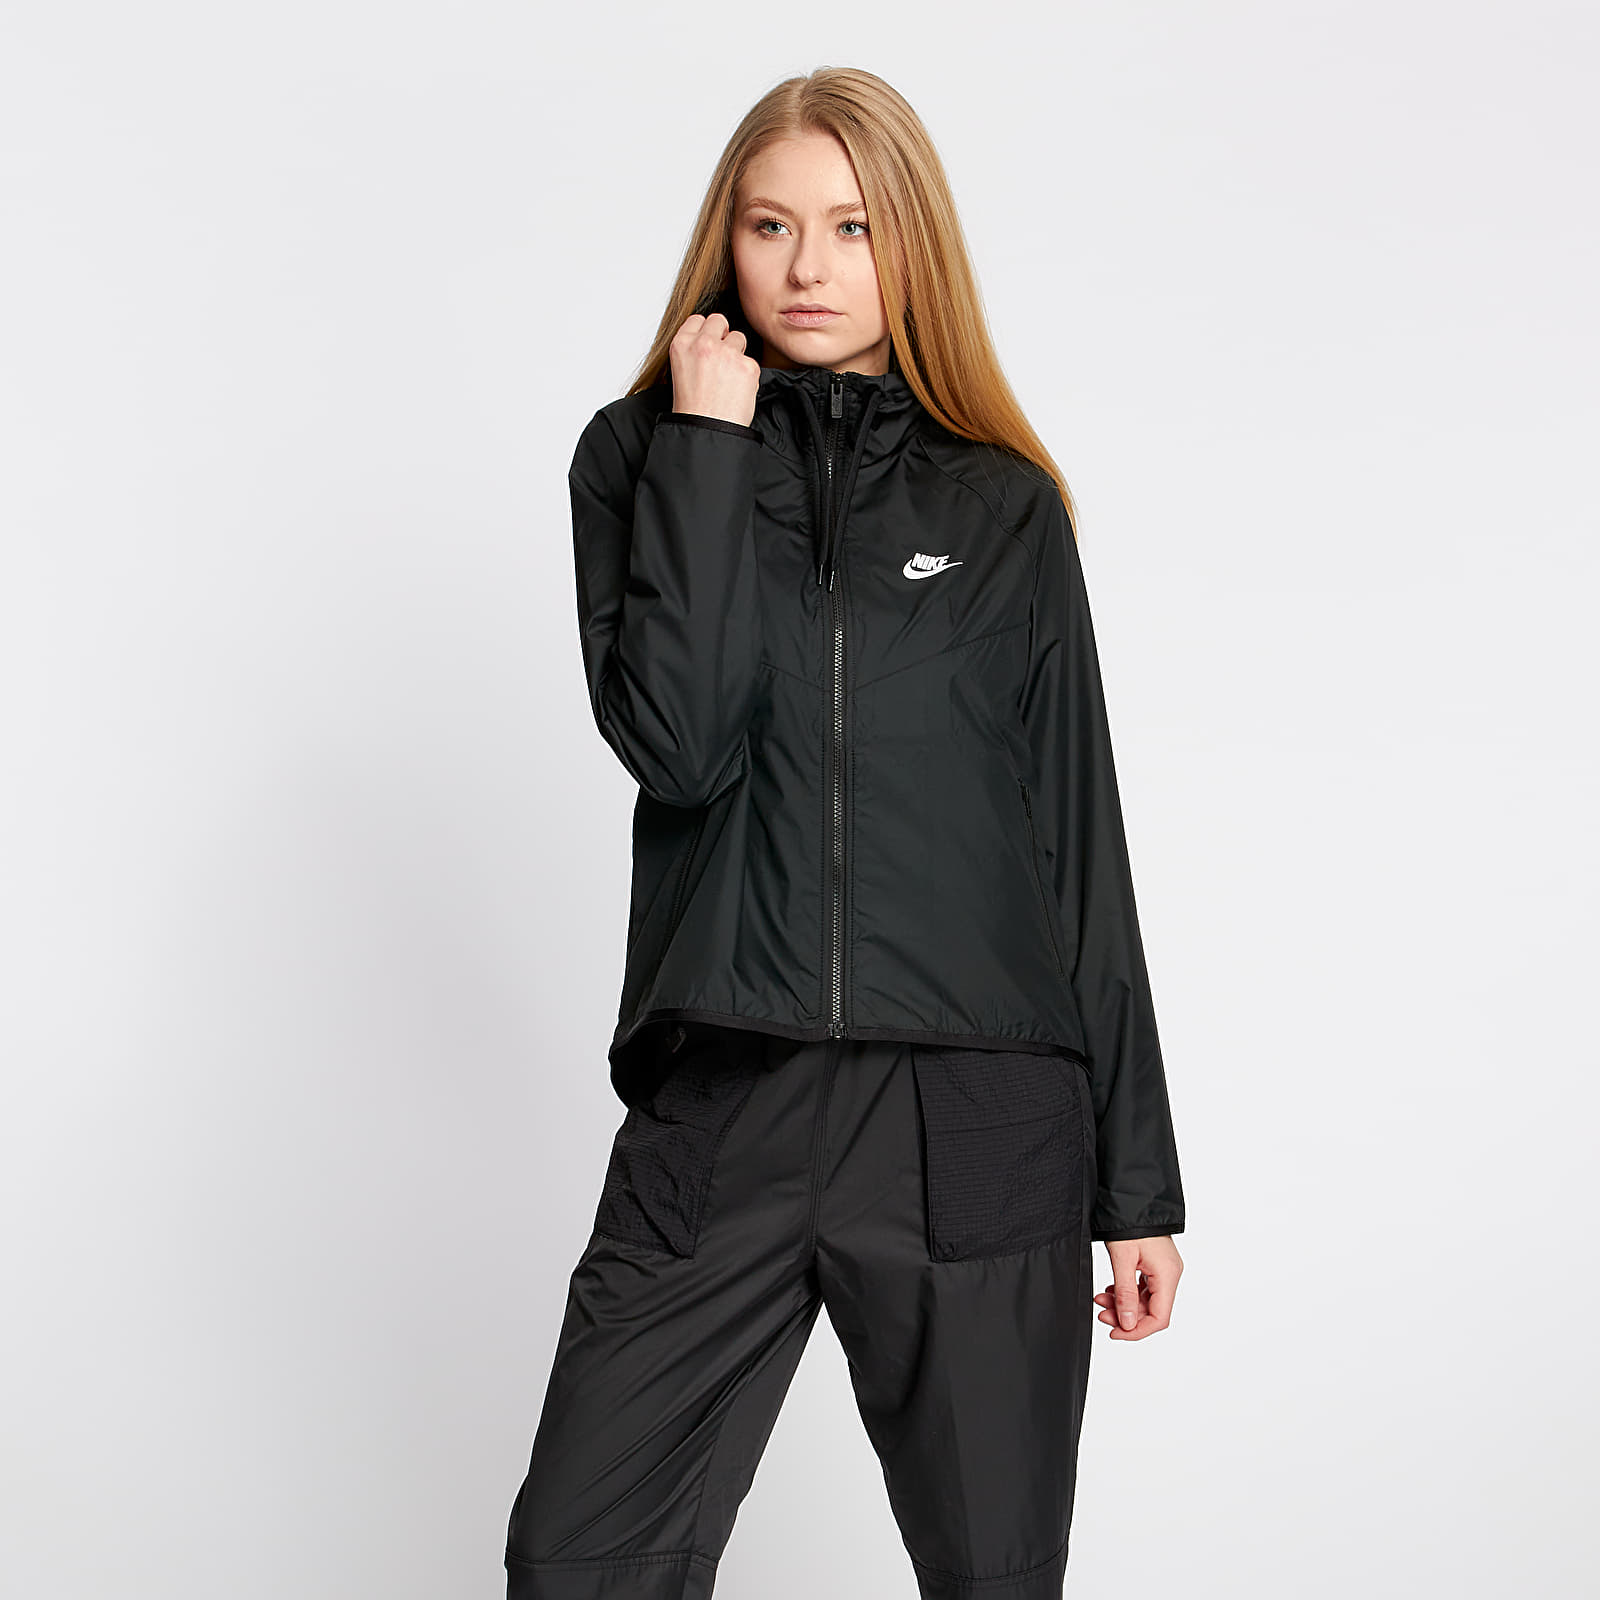 Bundy Nike Sportswear Wr Jacket Black/ Black/ White